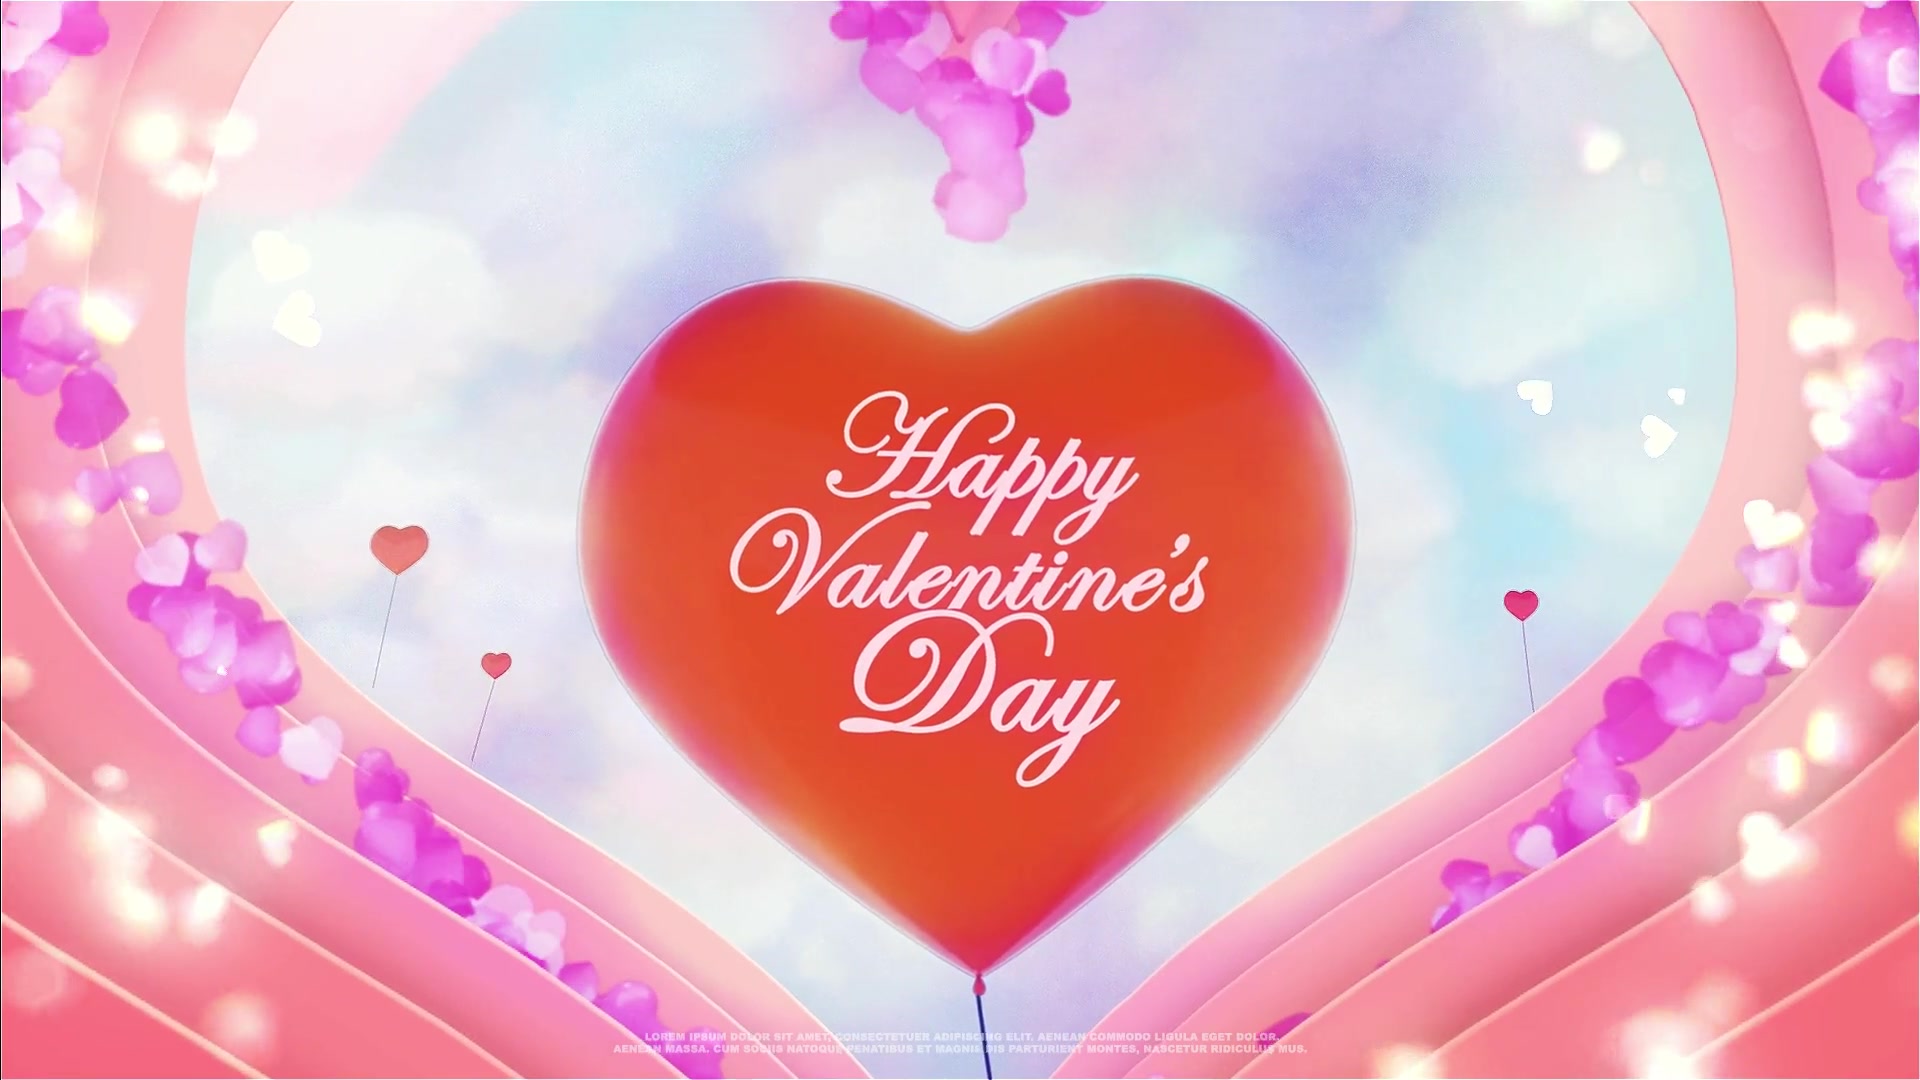 Nick Jr Valentine's Day Logo Animation on Vimeo